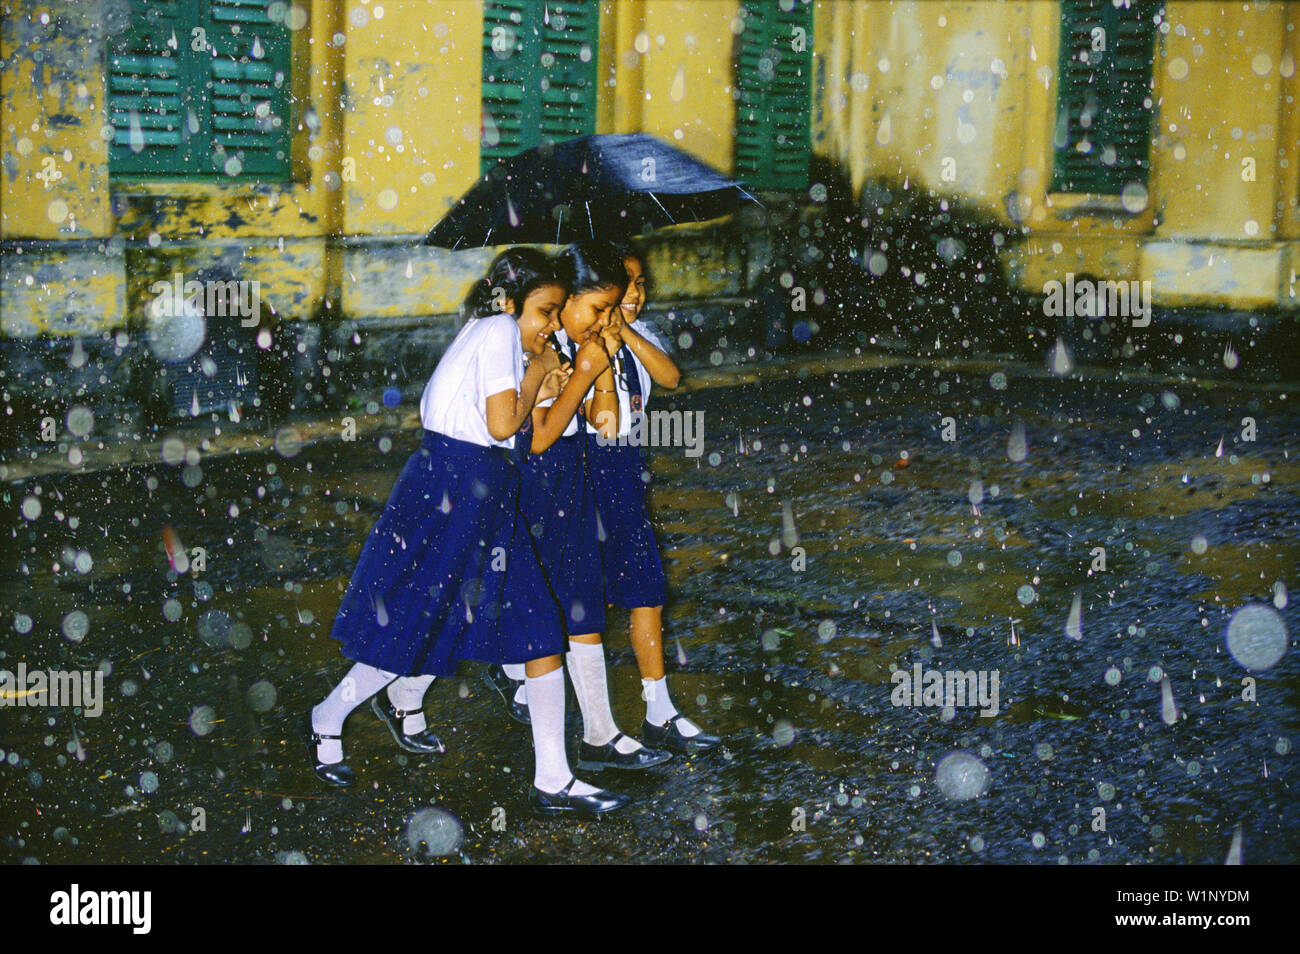 Studentesse in doccia monsonica, Calcutta, West Bengal India, Asia Foto  stock - Alamy